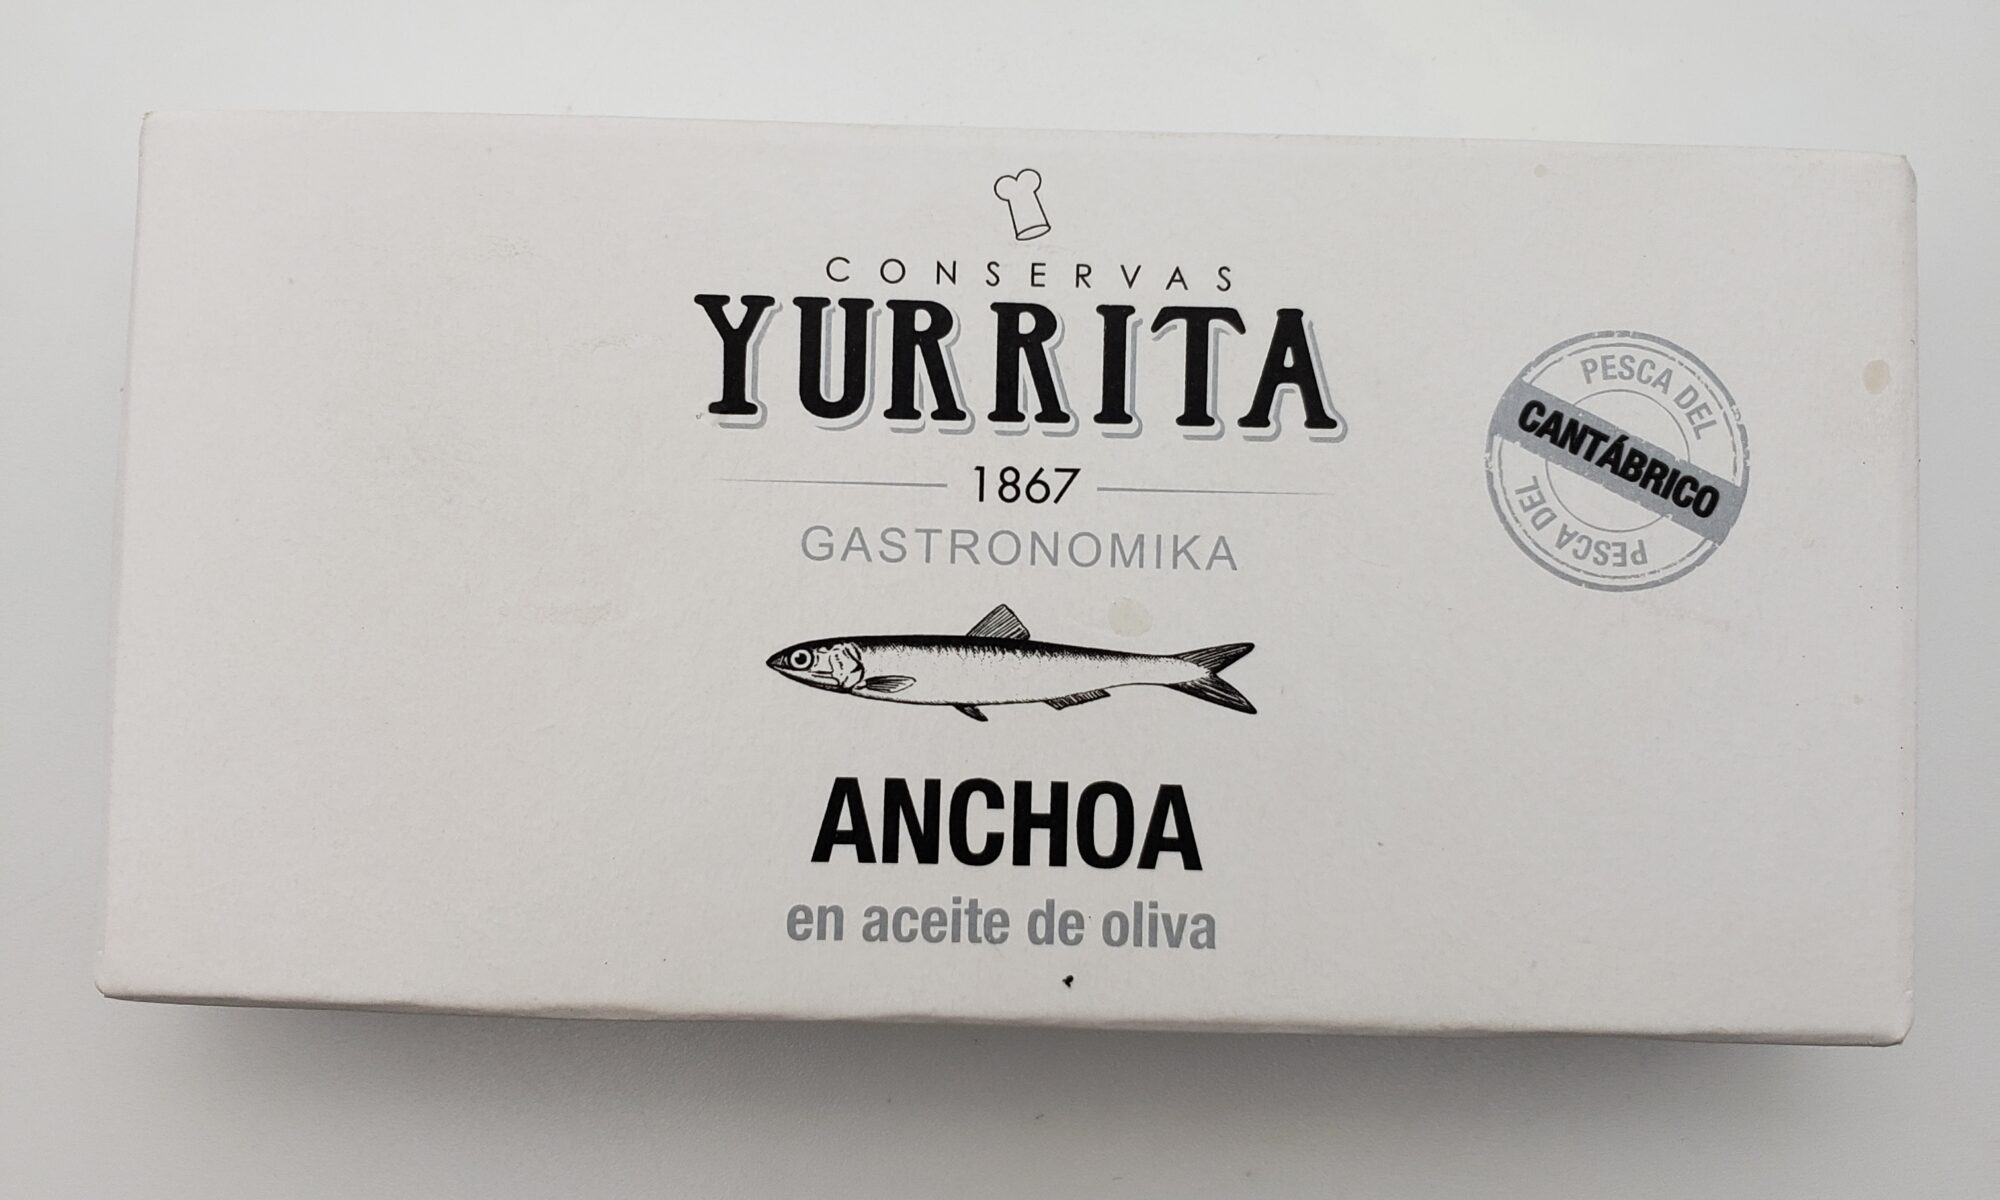 Image of Yurrita anchoa side label